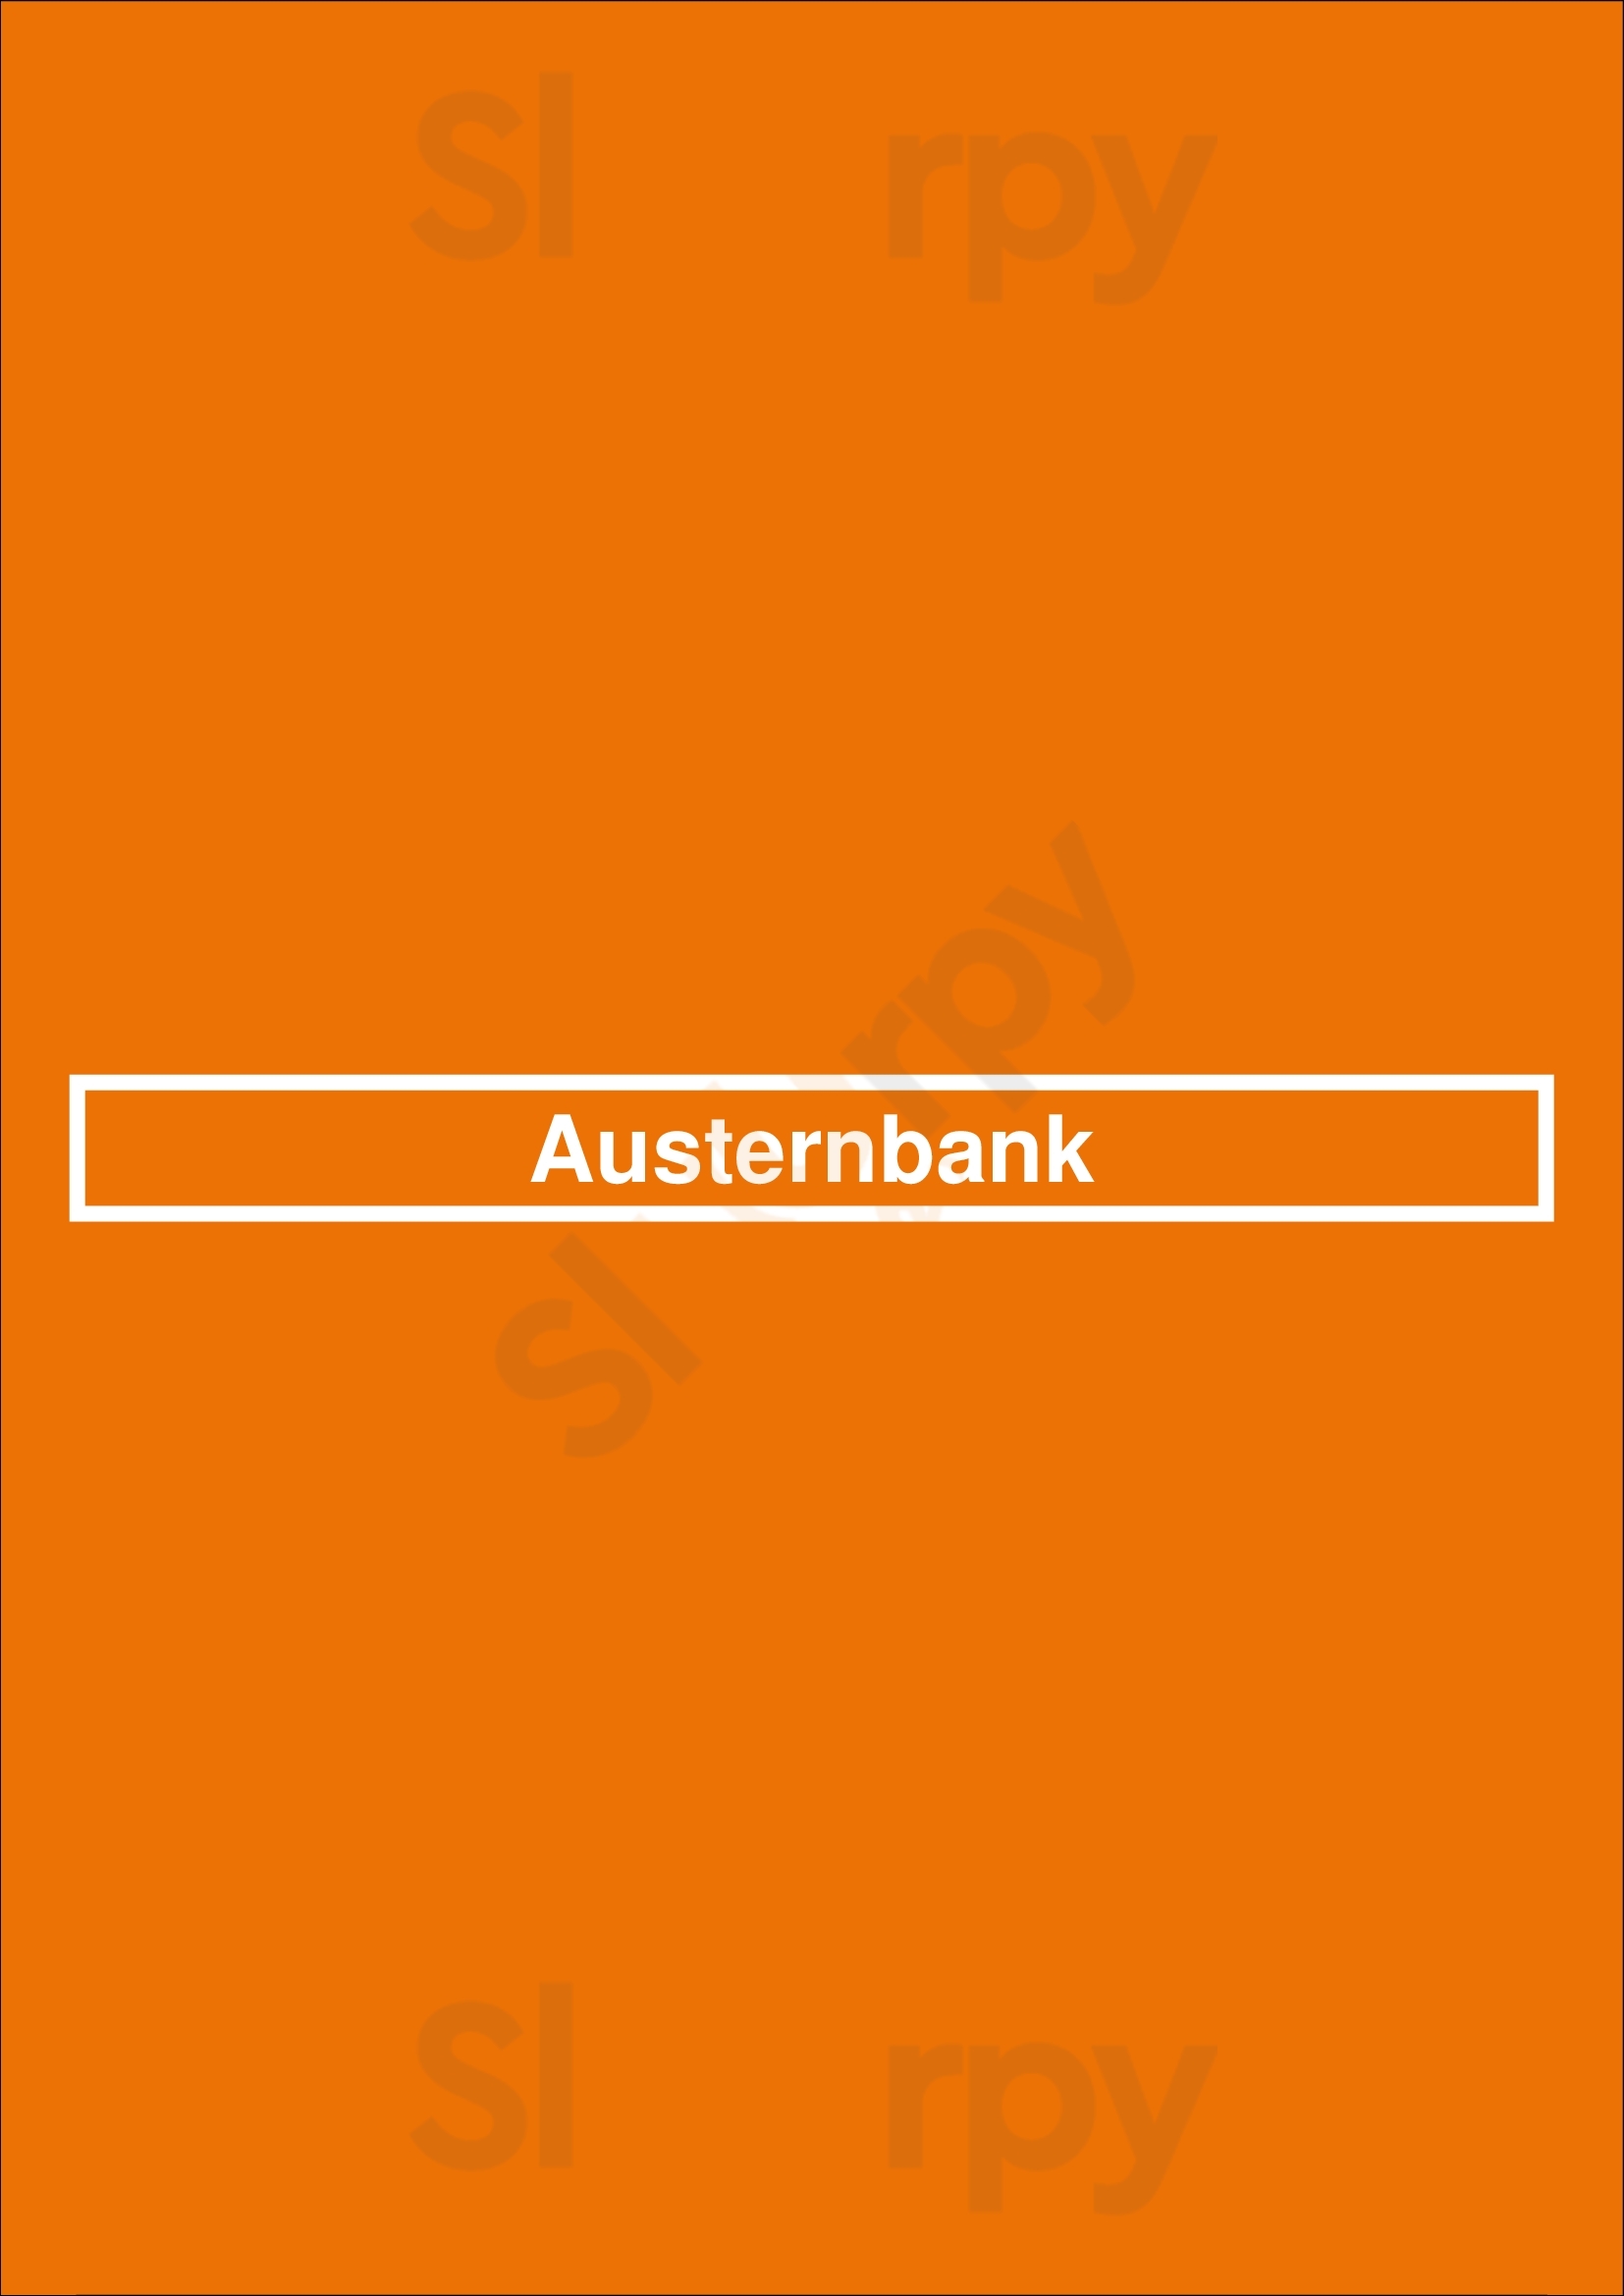 Austernbank Berlin Menu - 1